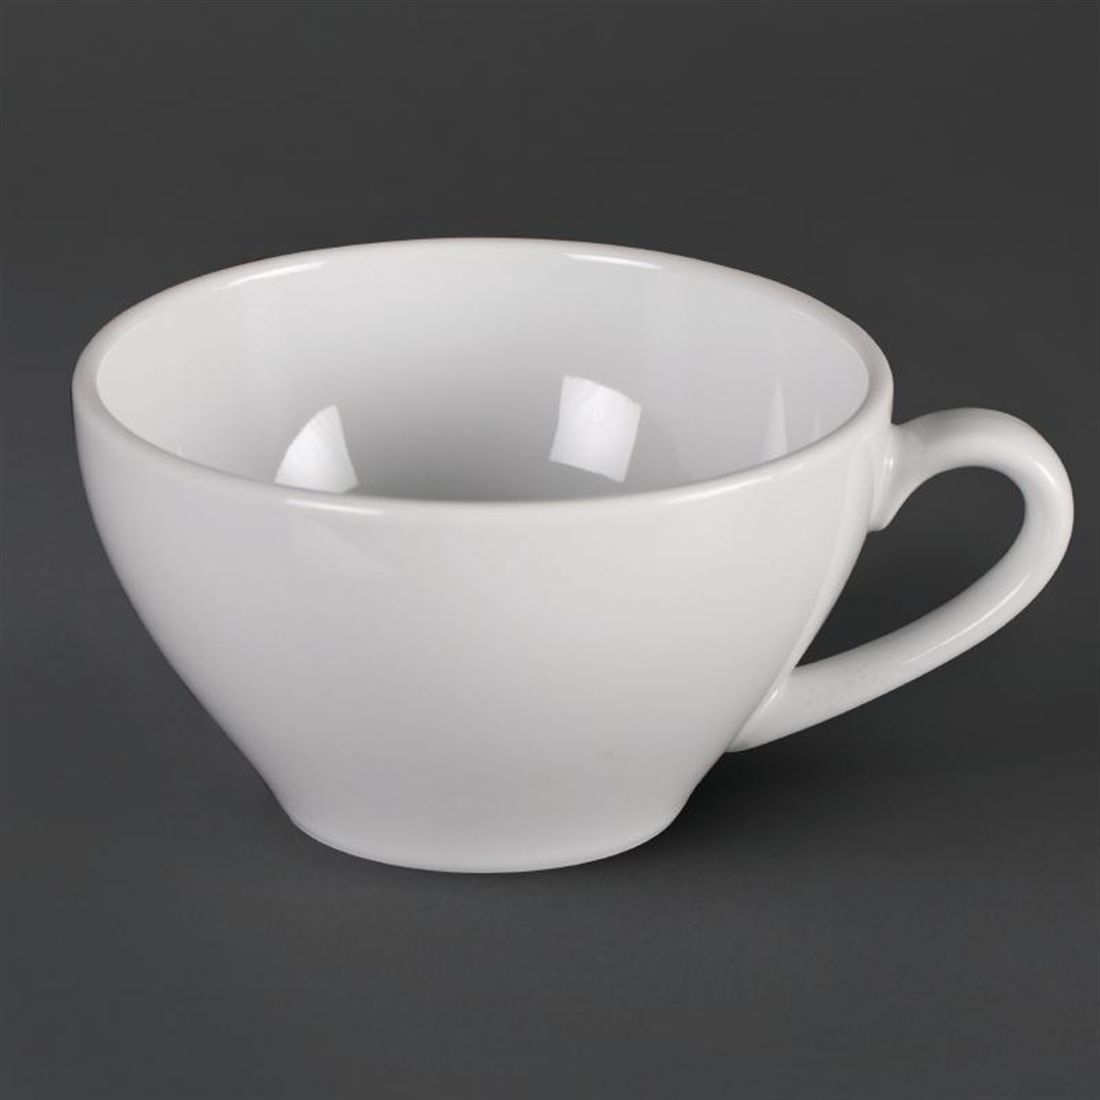 Royal Porcelain Classic White Tea Cups 180ml